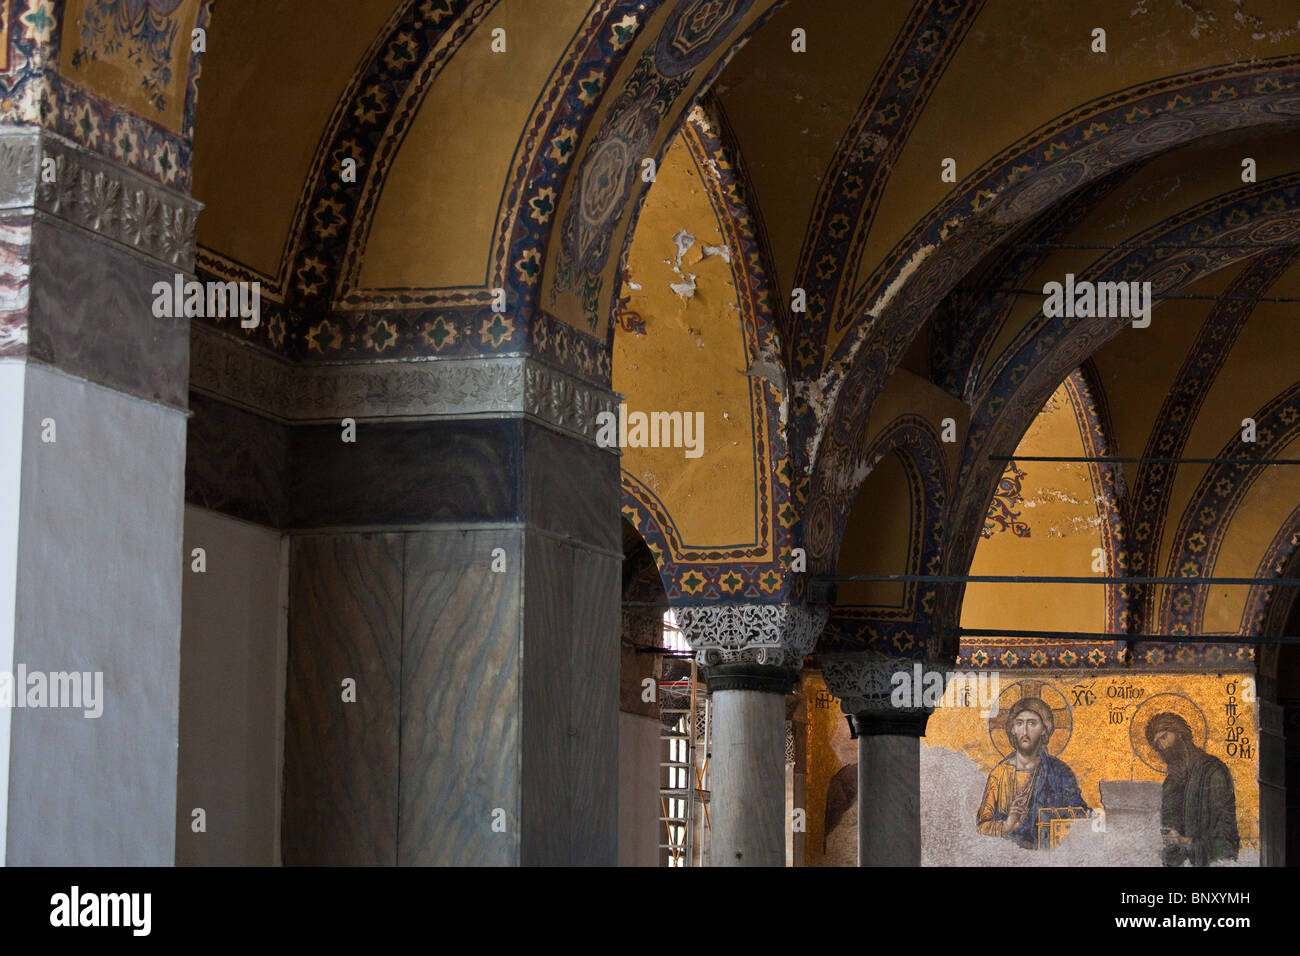 Fliesen Mosaik in der Hagia Sophia in Istanbul, Türkei Stockfoto